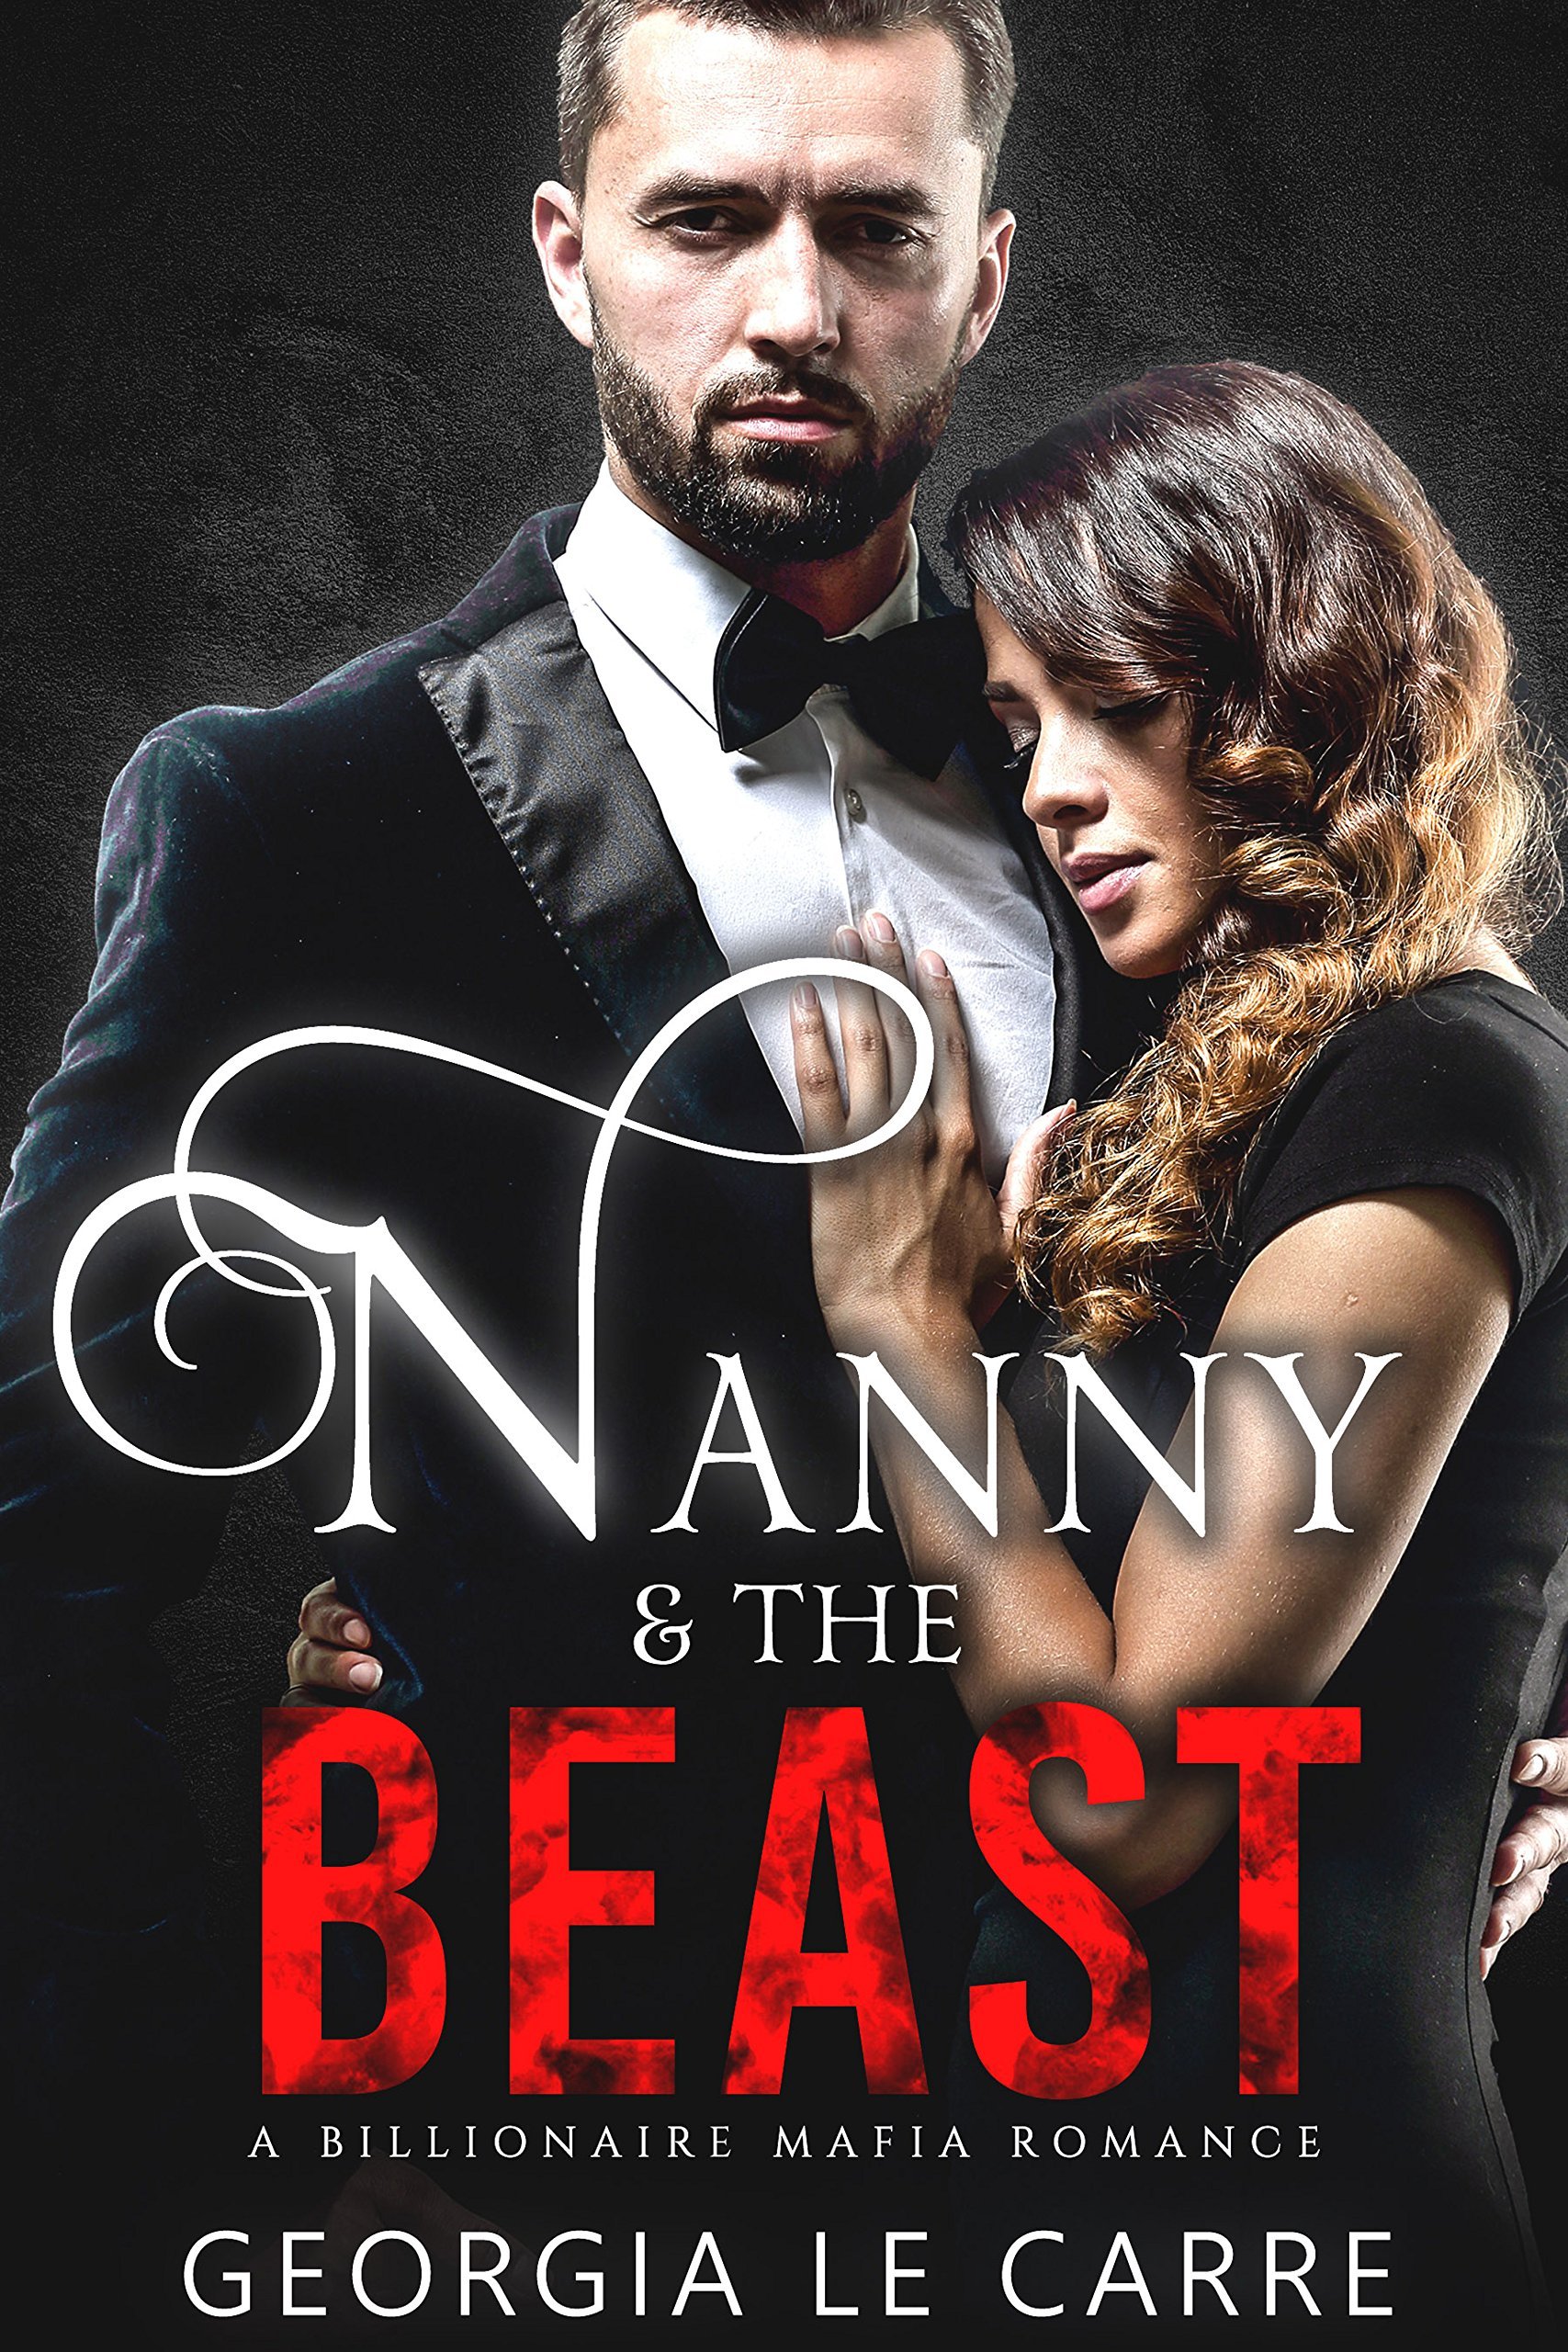 Nanny and the beast: A Billionaire Mafia Romance Cover